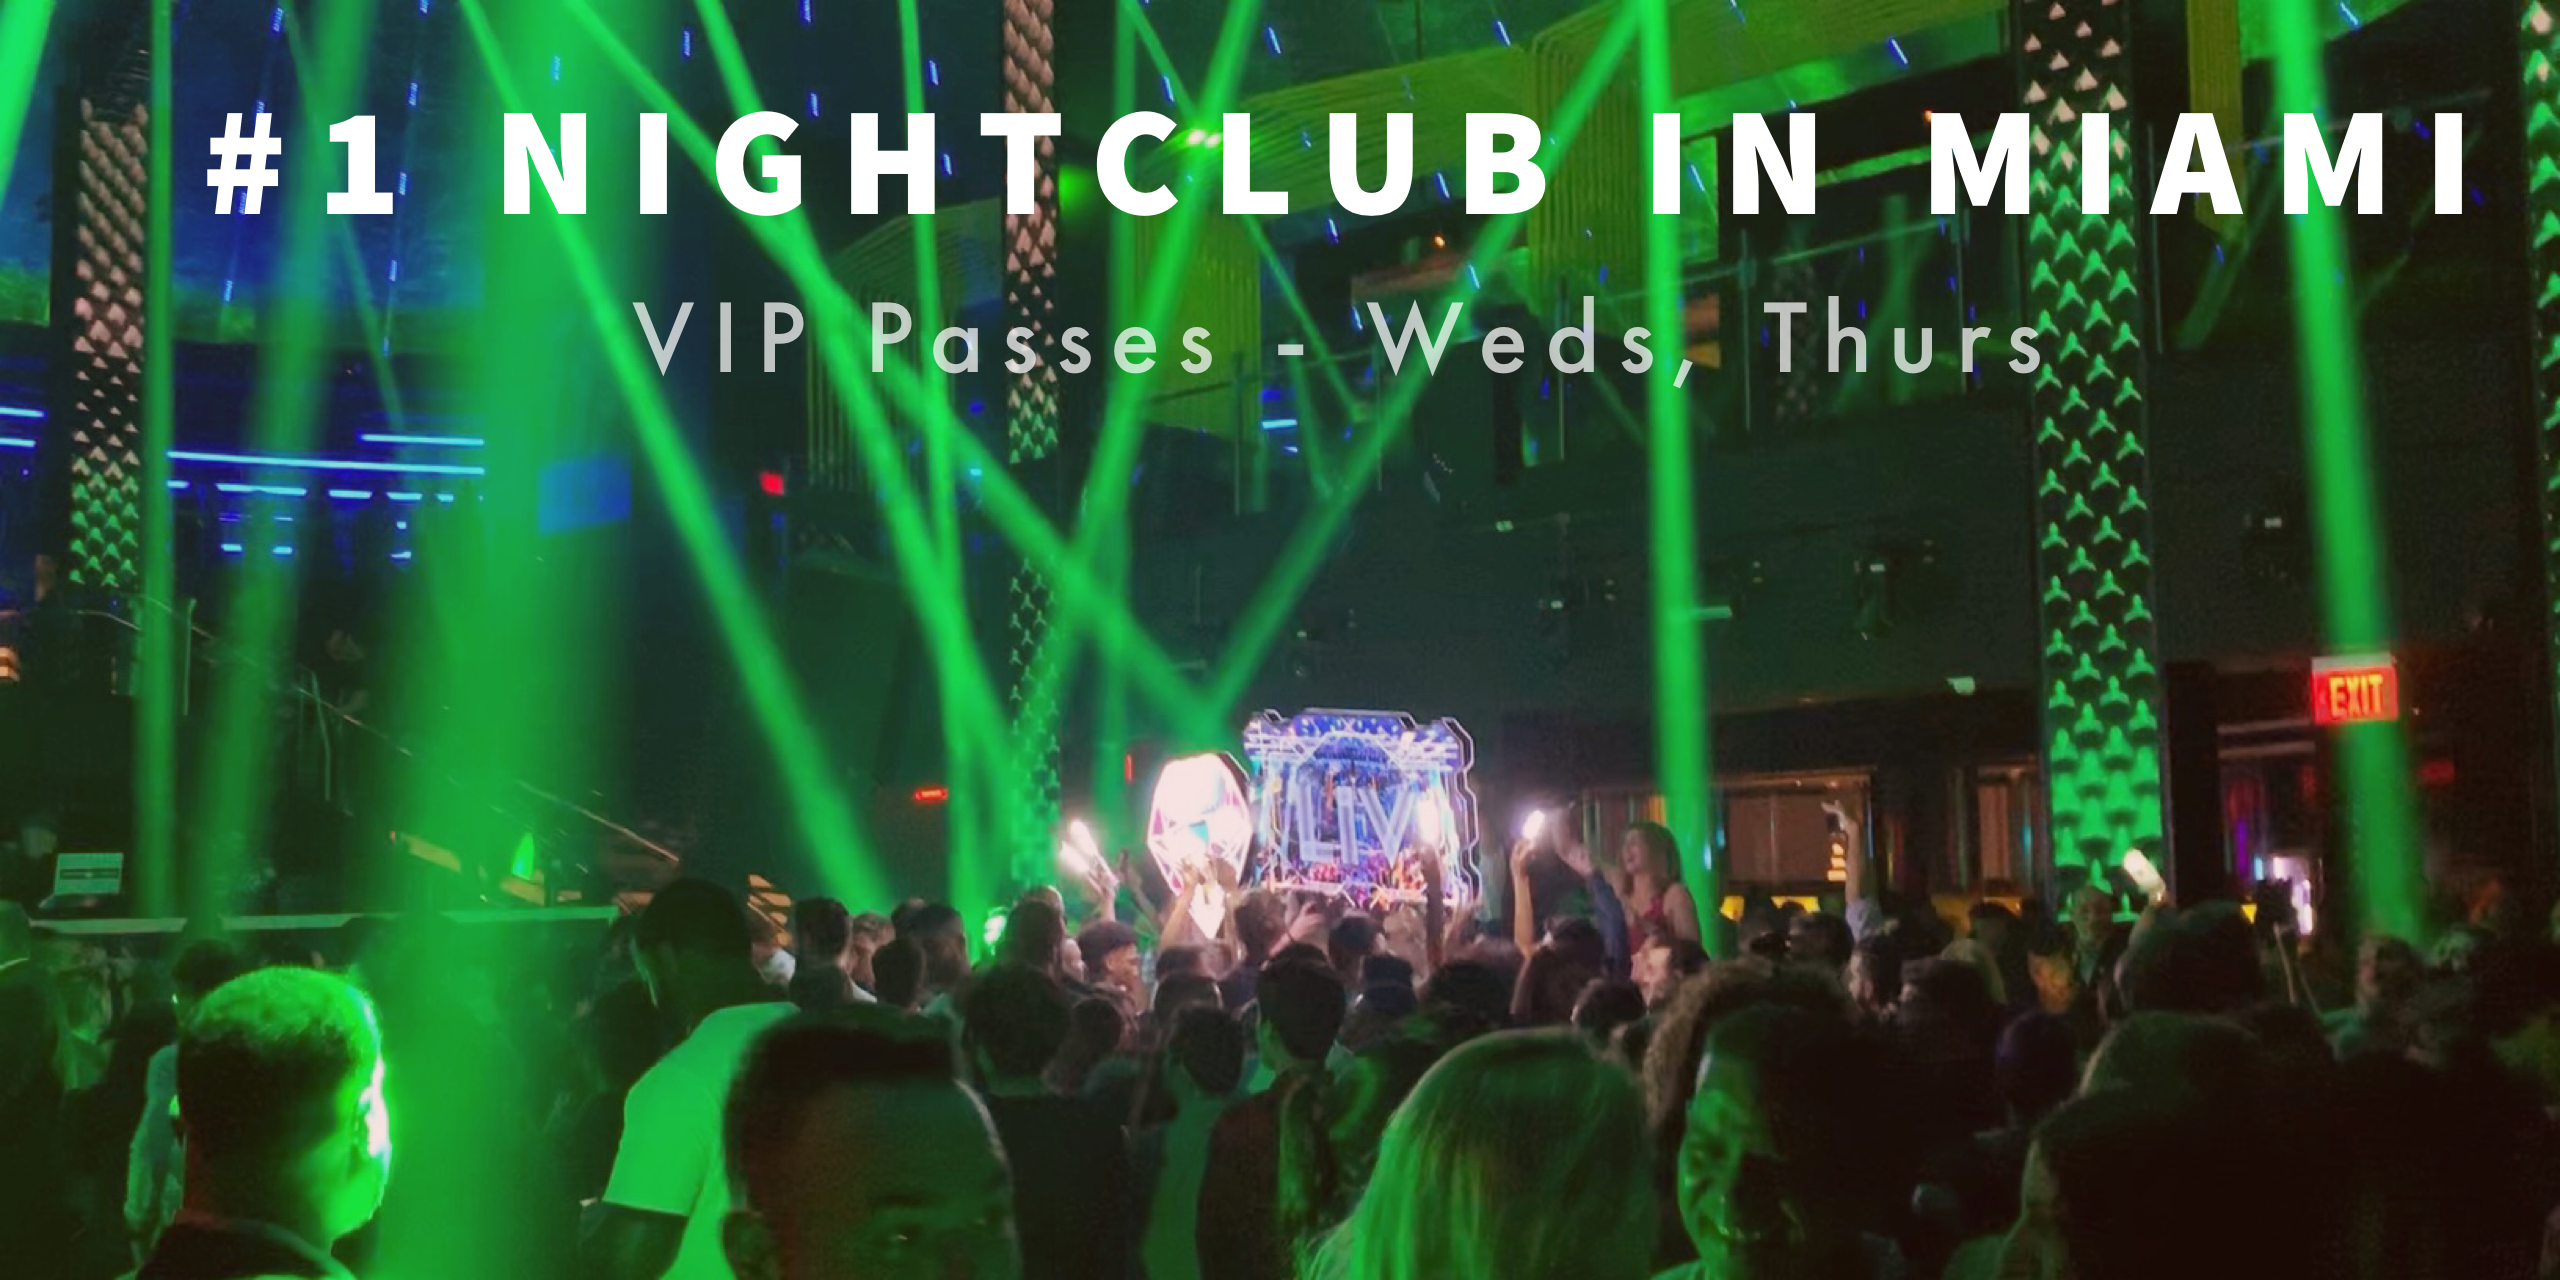 Spring Break 2020 Wednesday VIP Party Ticket to #1 Nightclub in Miami Beach